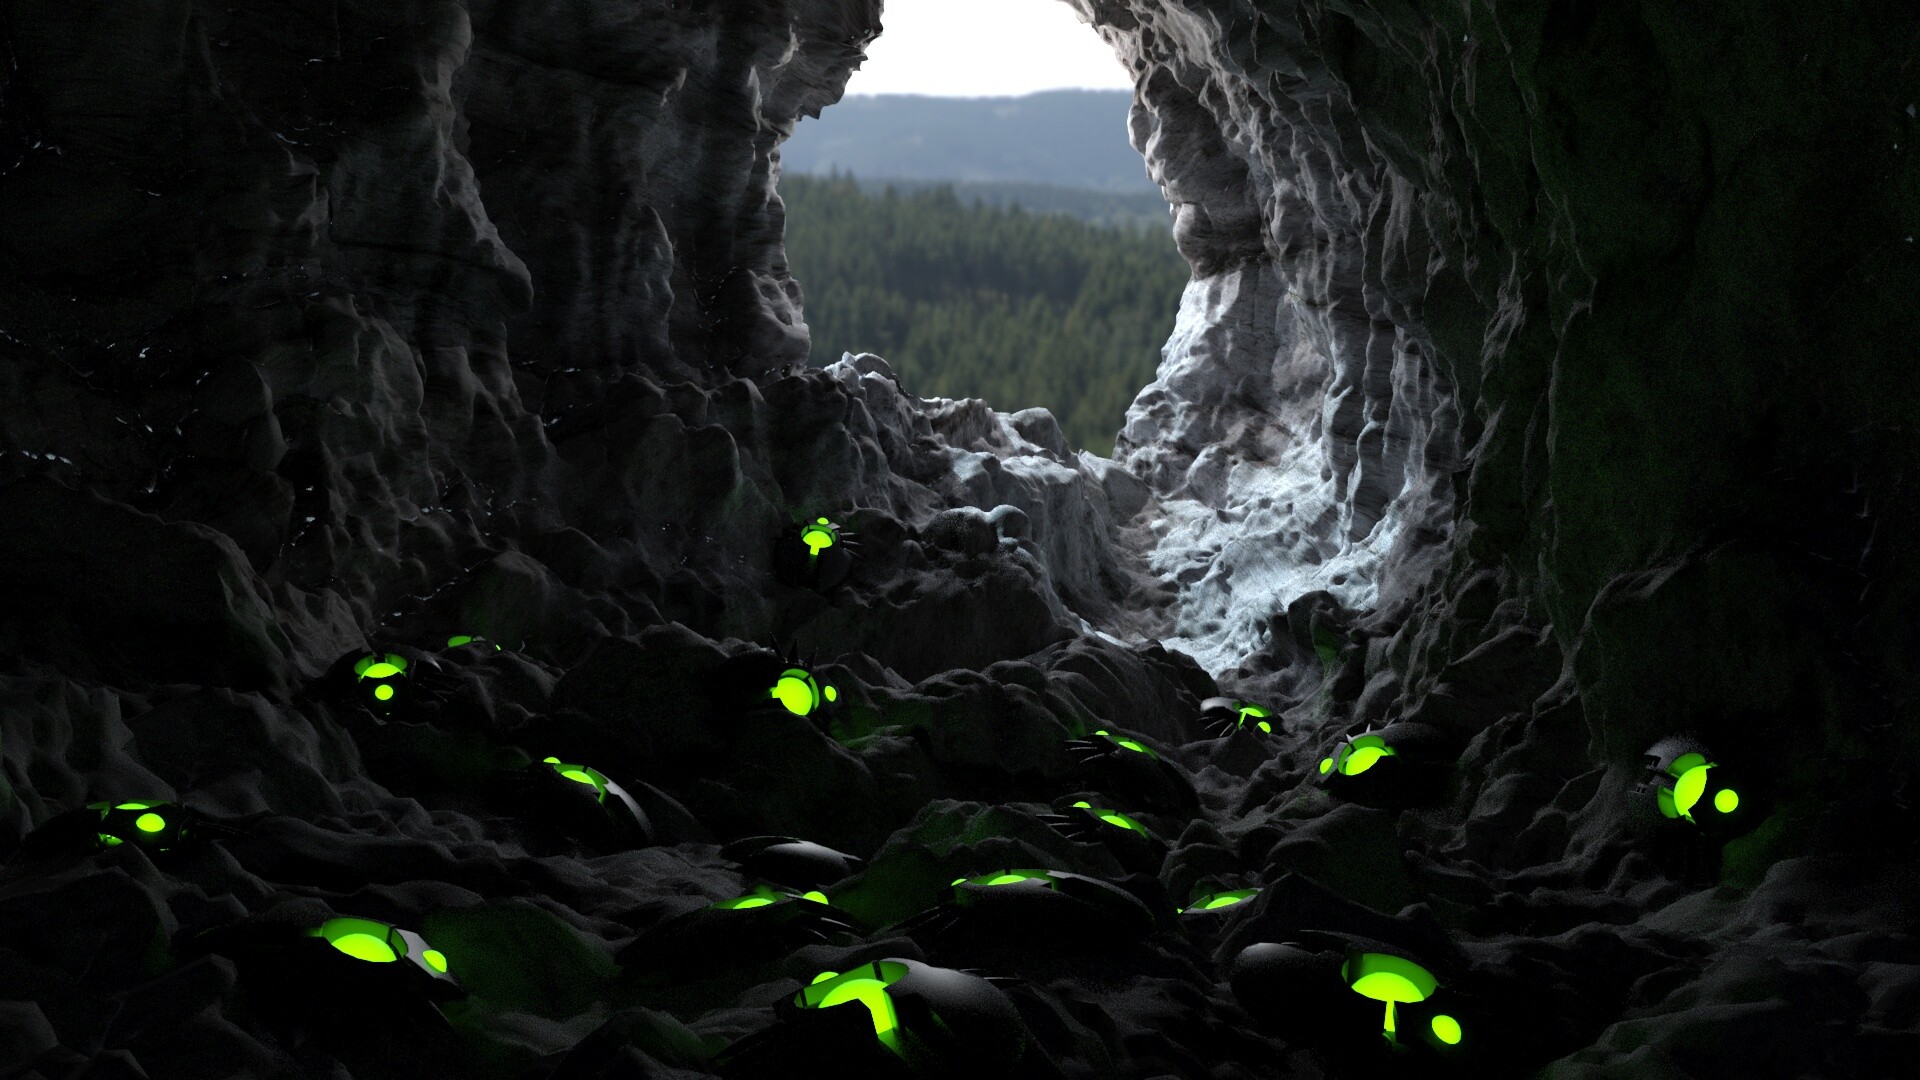 ArtStation - Necron inspired sci-fi cave scene